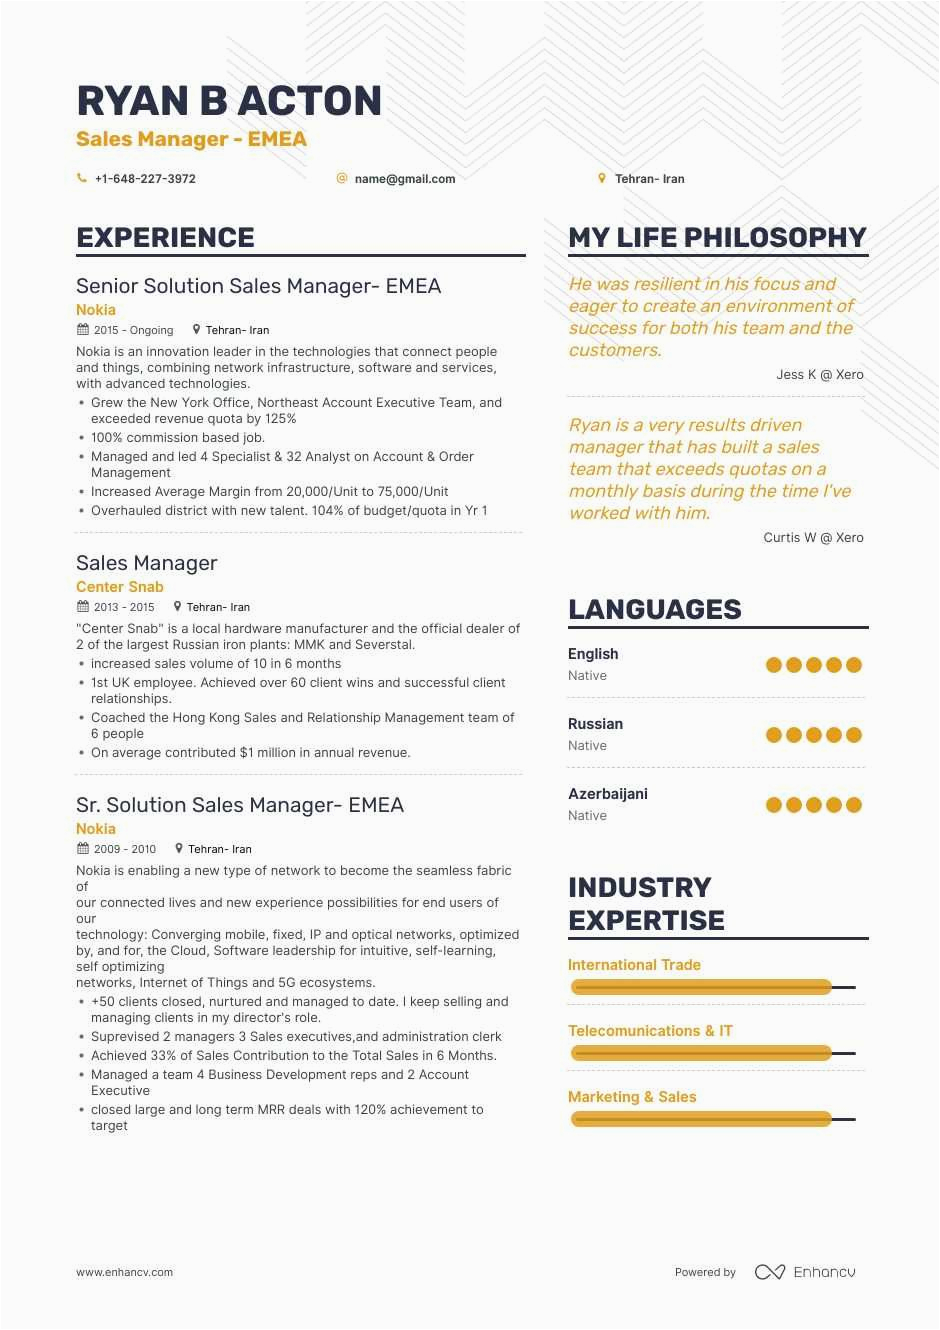 Sample Resume for Sales Manager Position Sales Manager Resume Samples and 10 Examples